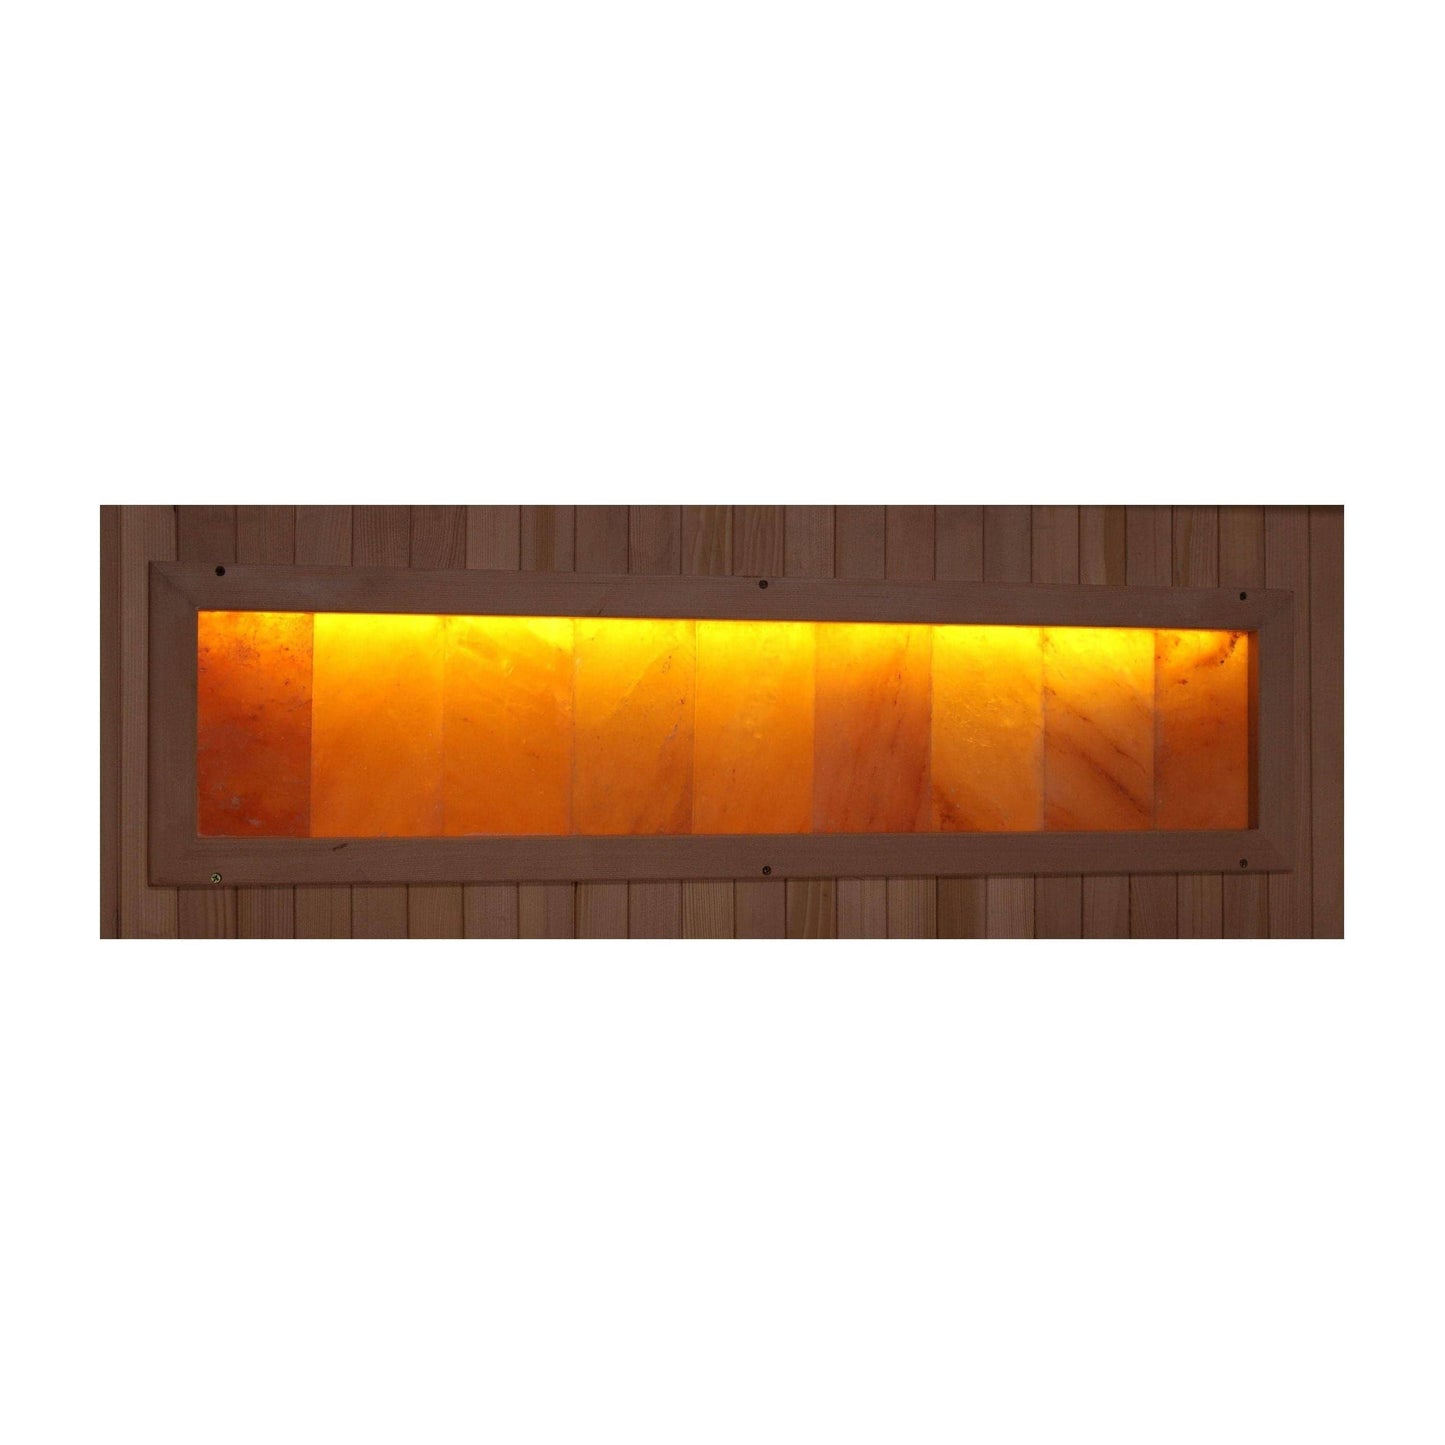 Golden Design Golden Designs 2-Person Hotel Edition Full Spectrum PureTech™ Near Zero EMF FAR Infrared Sauna with Himalayan Salt Bar in Canadian Hemlock | GDI-8020-H2